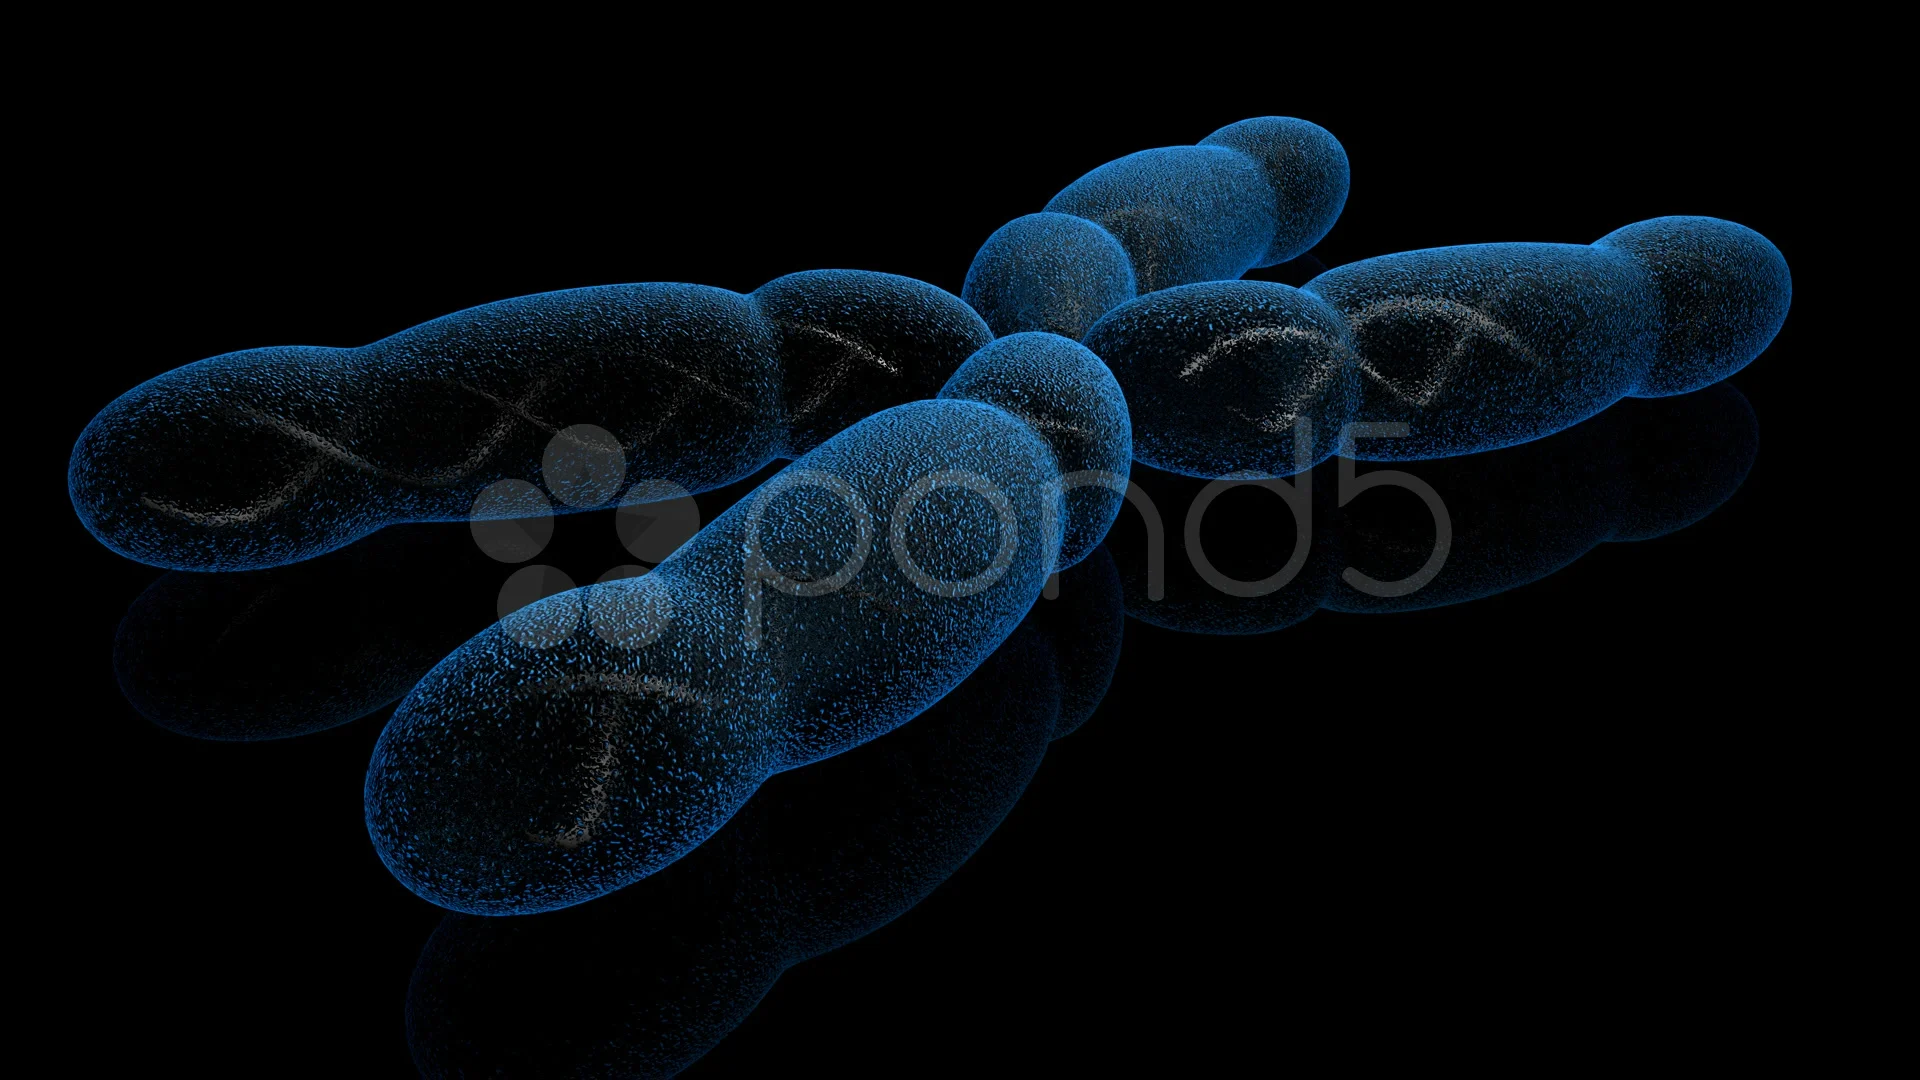 Chromosomes Images HD Pictures For Free Vectors Download  Lovepikcom